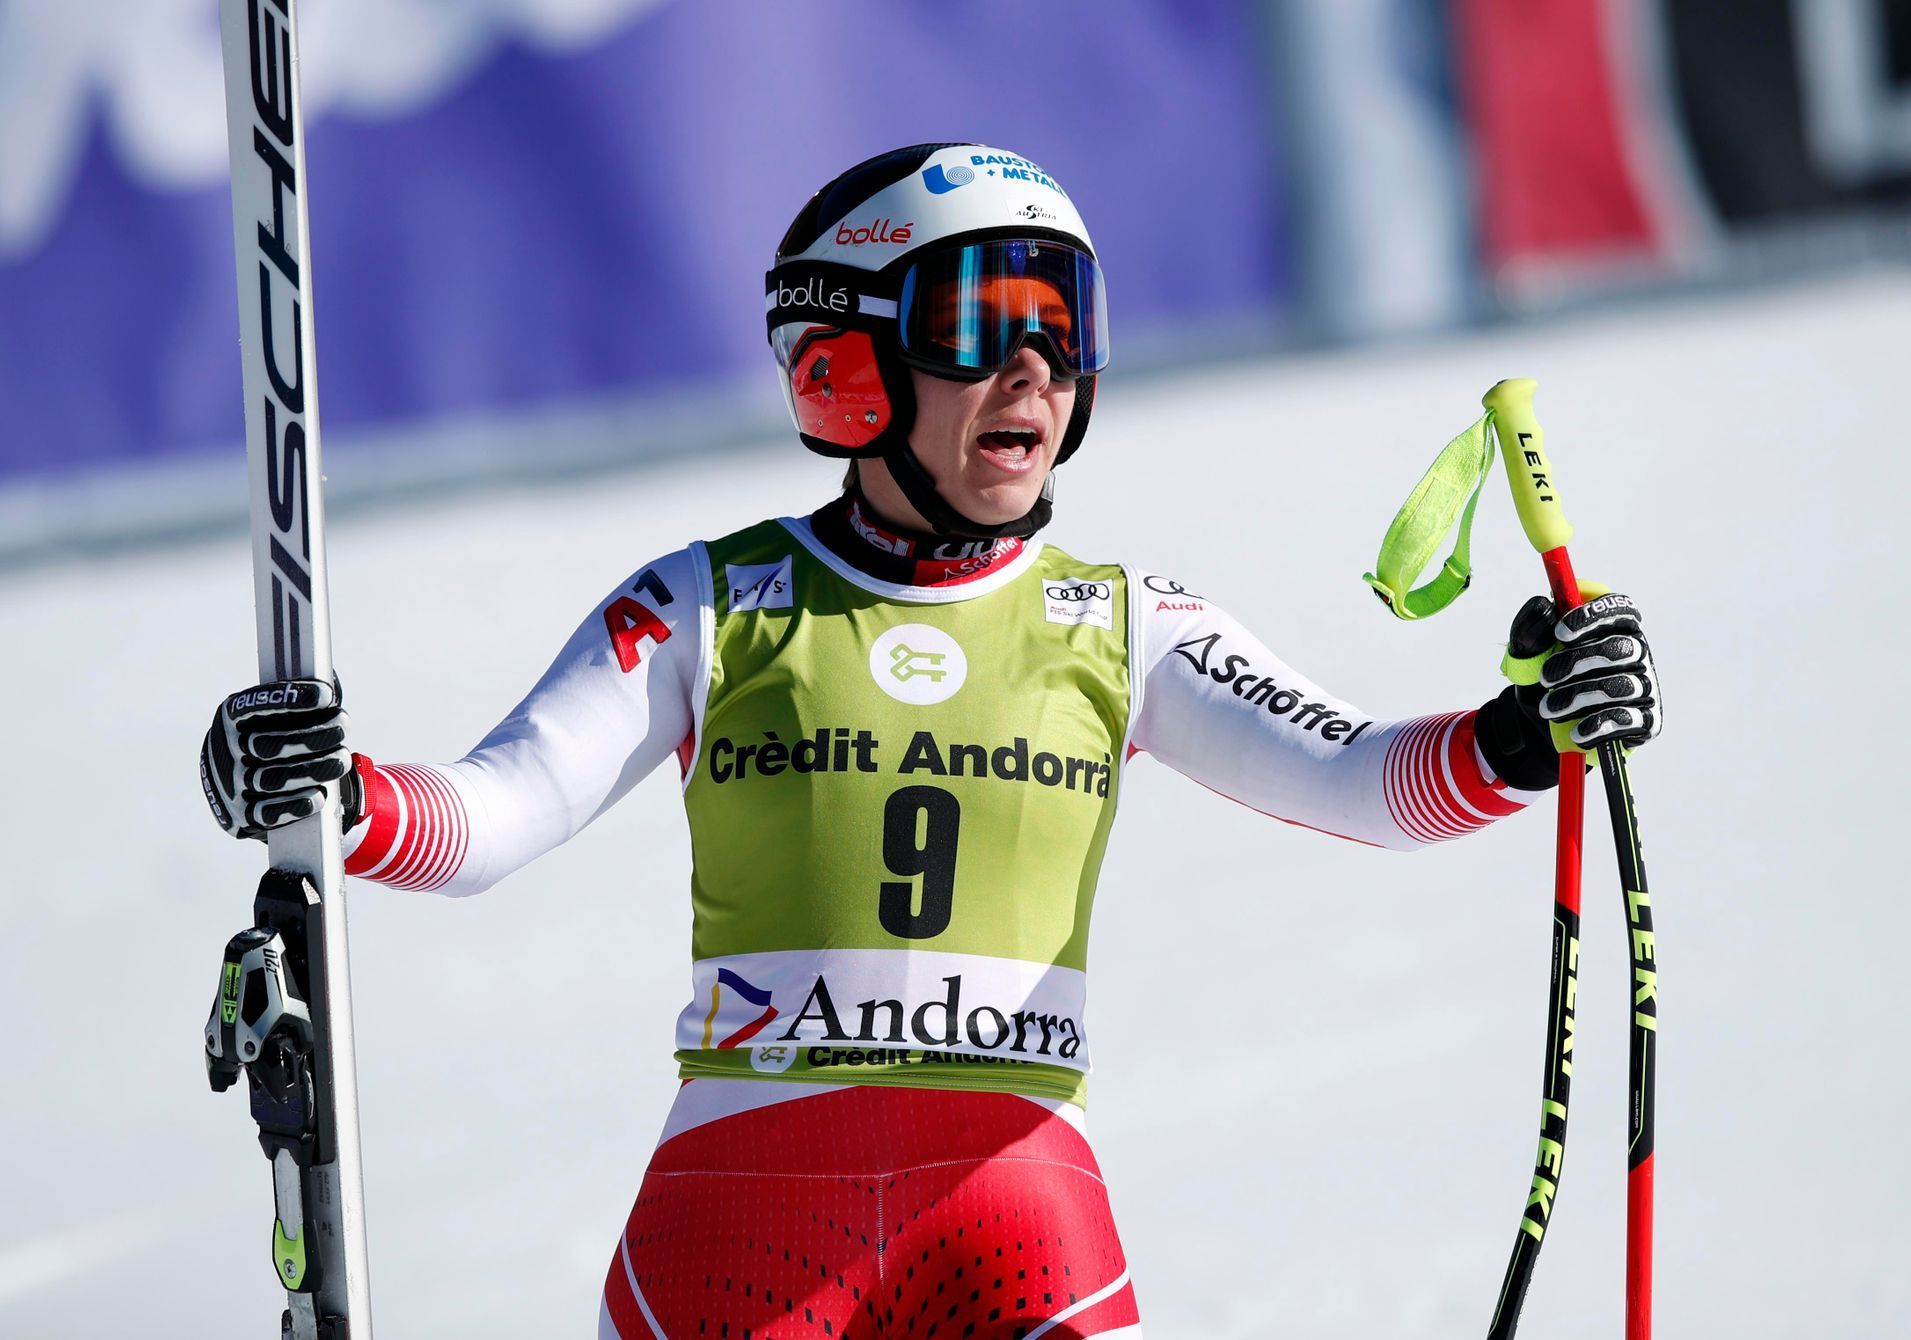 FIS Alpine Skiing World Cup Finals - Women's Super G